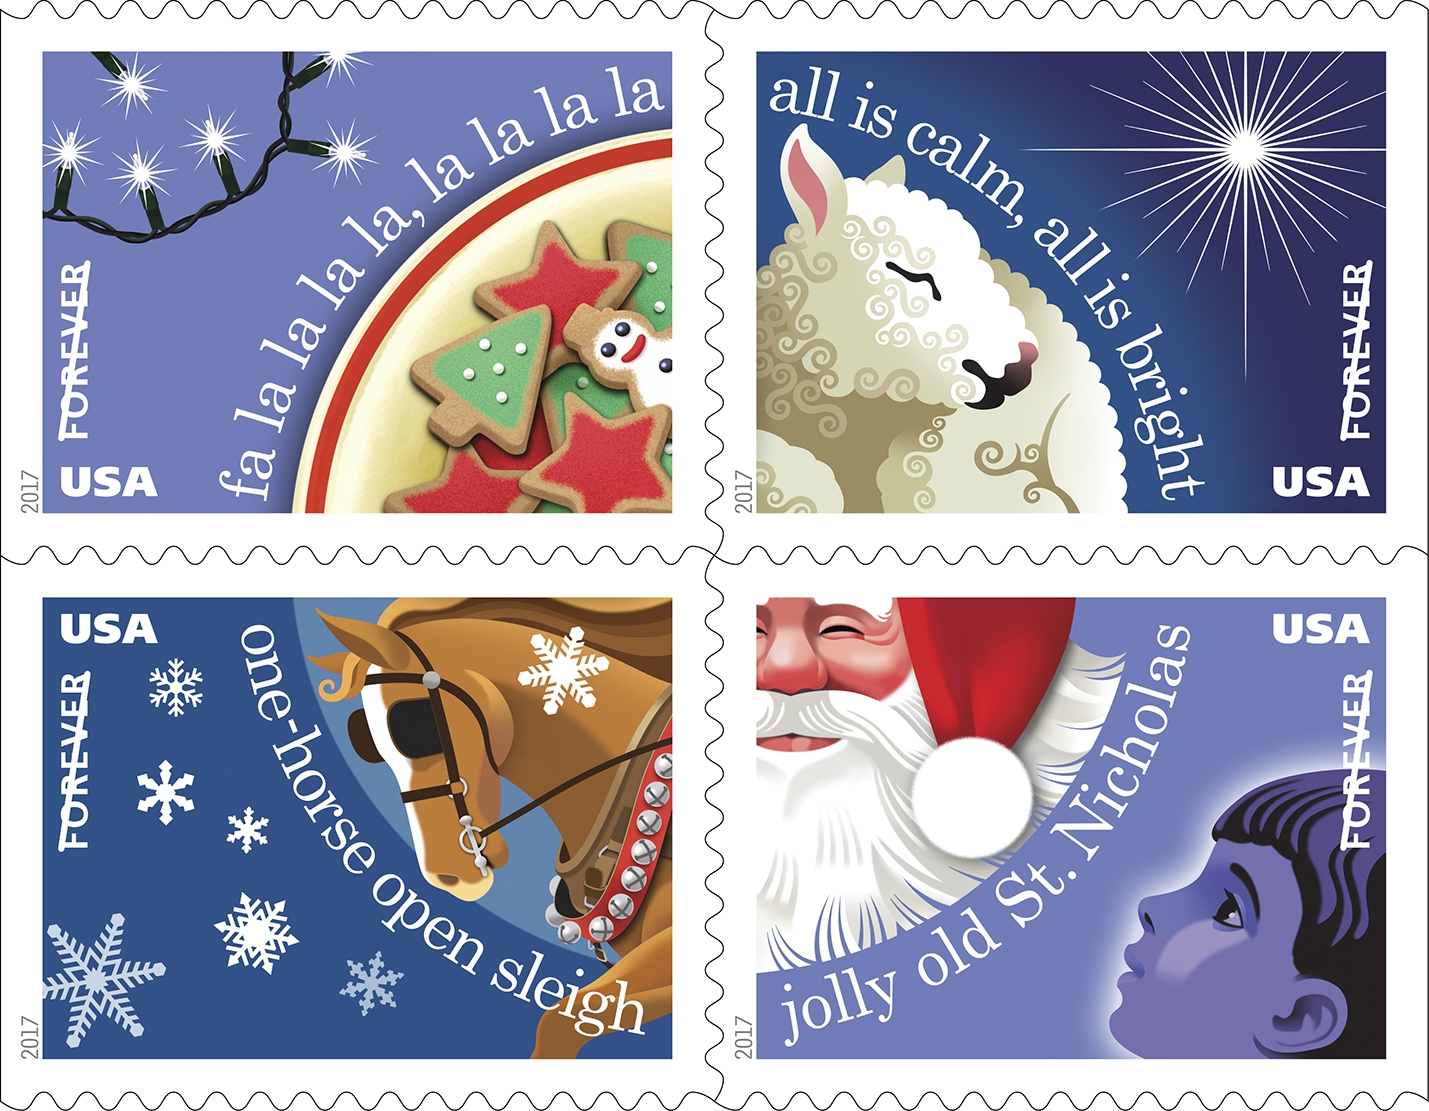 Christmas Carol Forever stamps